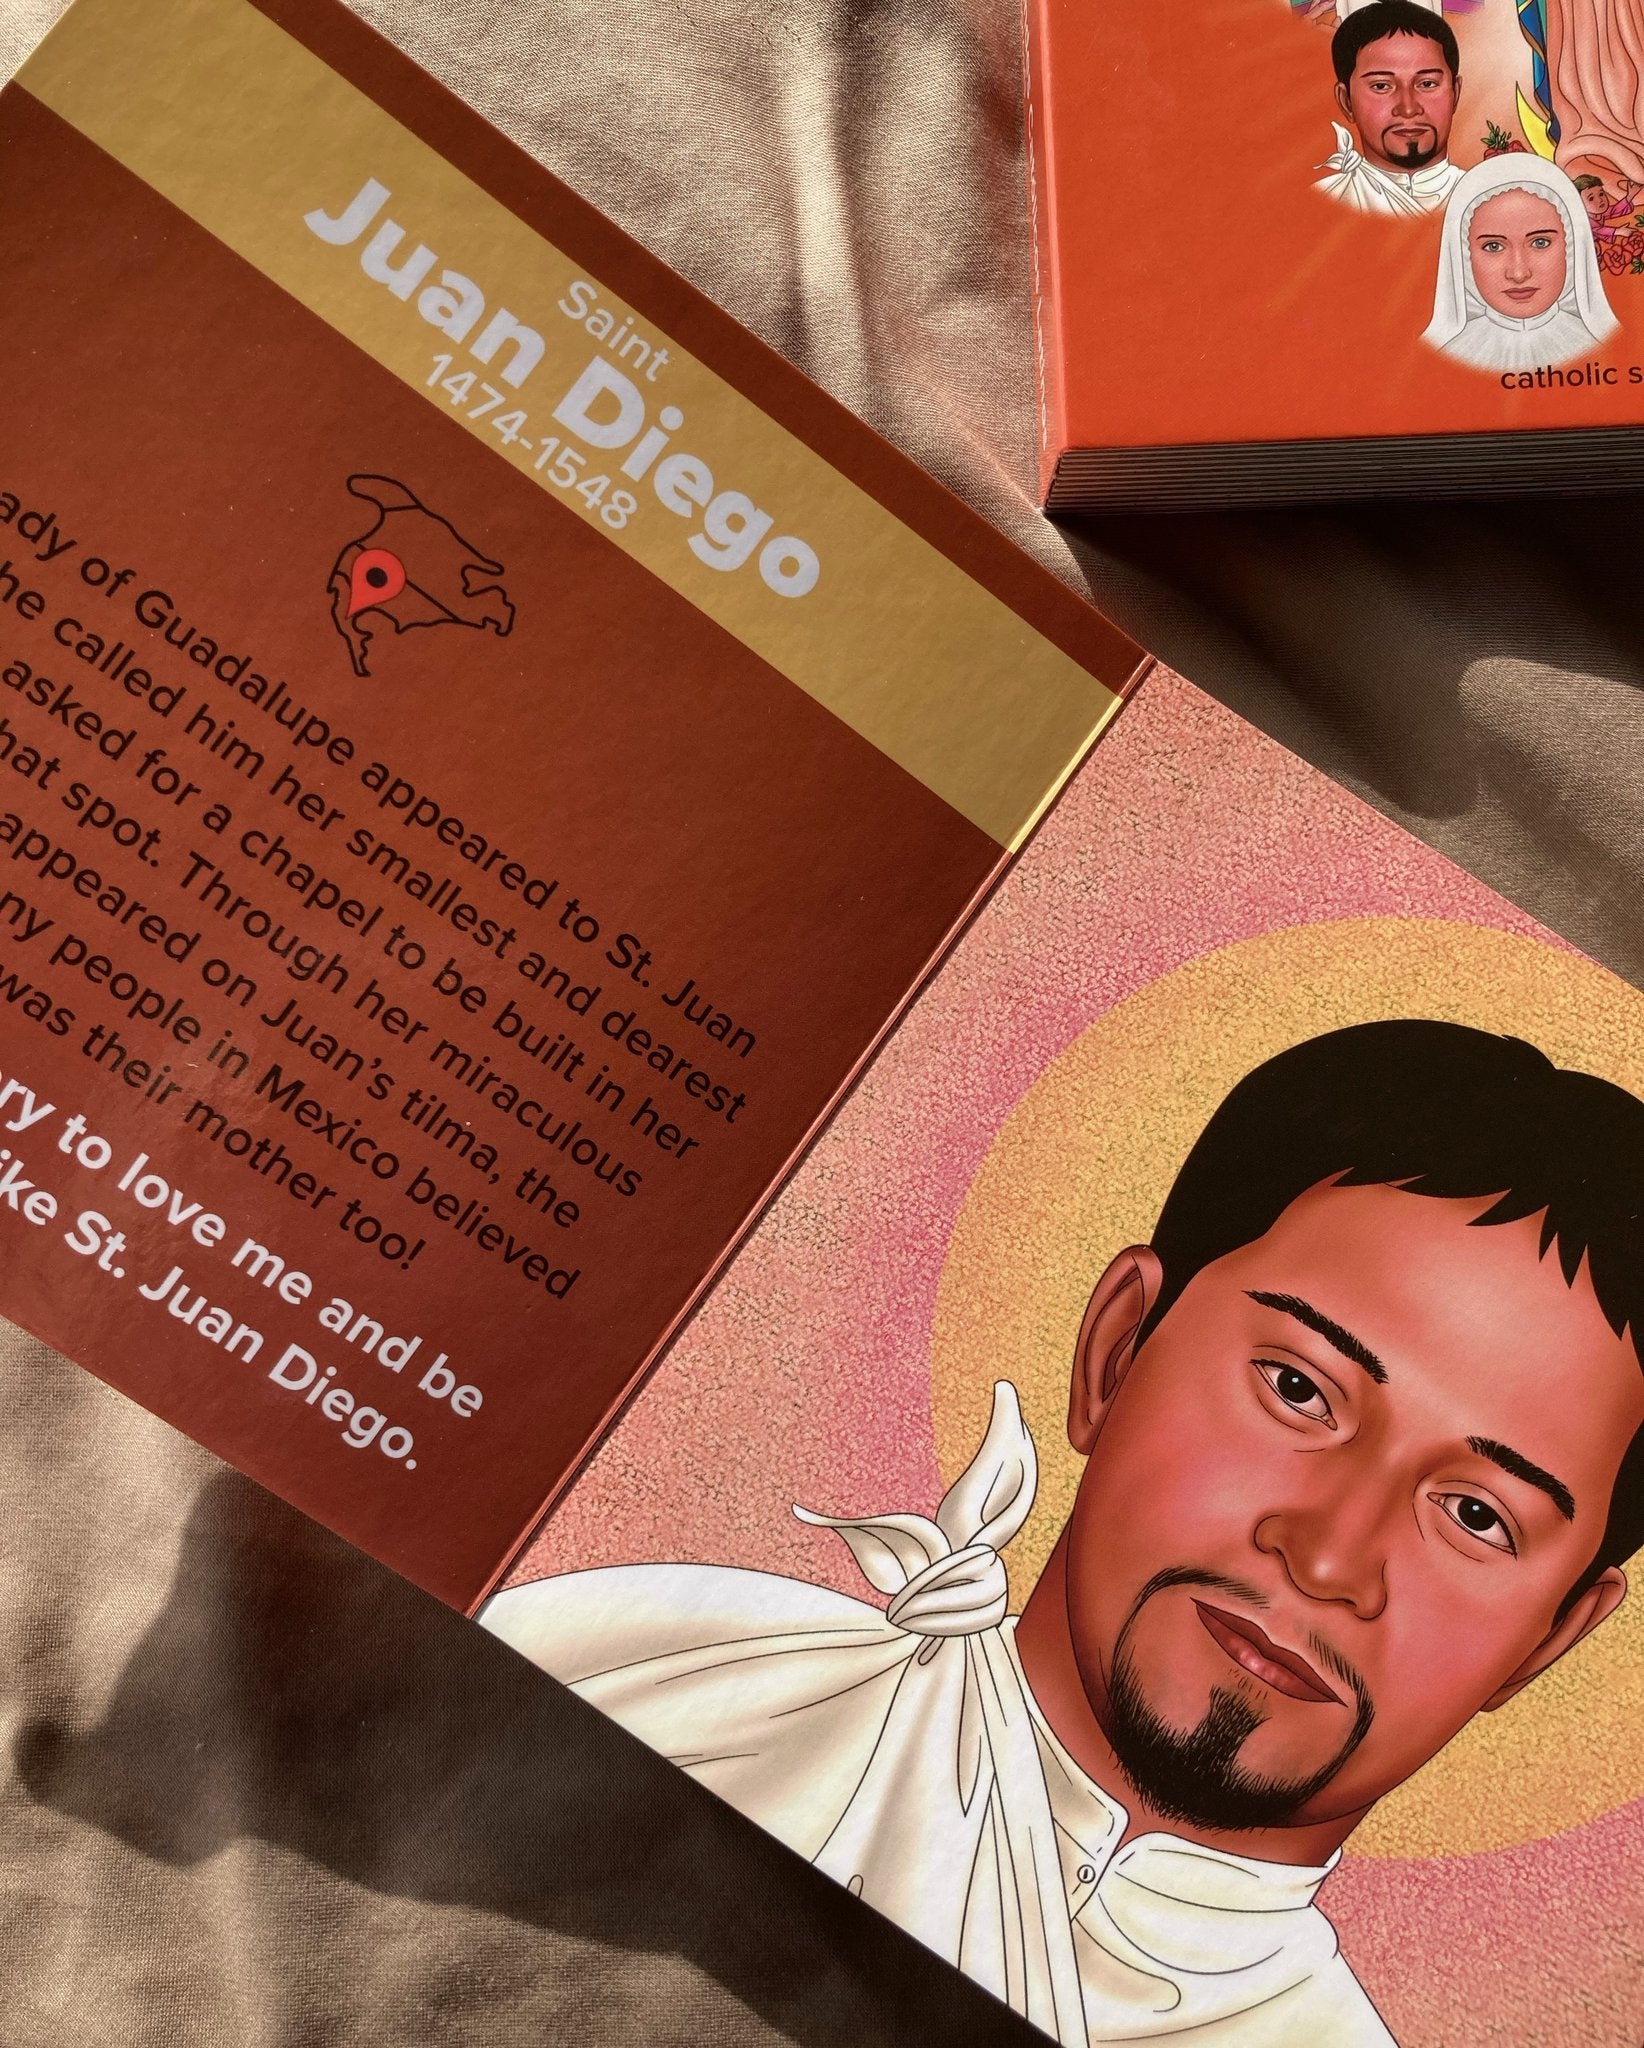 Saints Like Me: Great Latino Catholics (Spanish Edition)